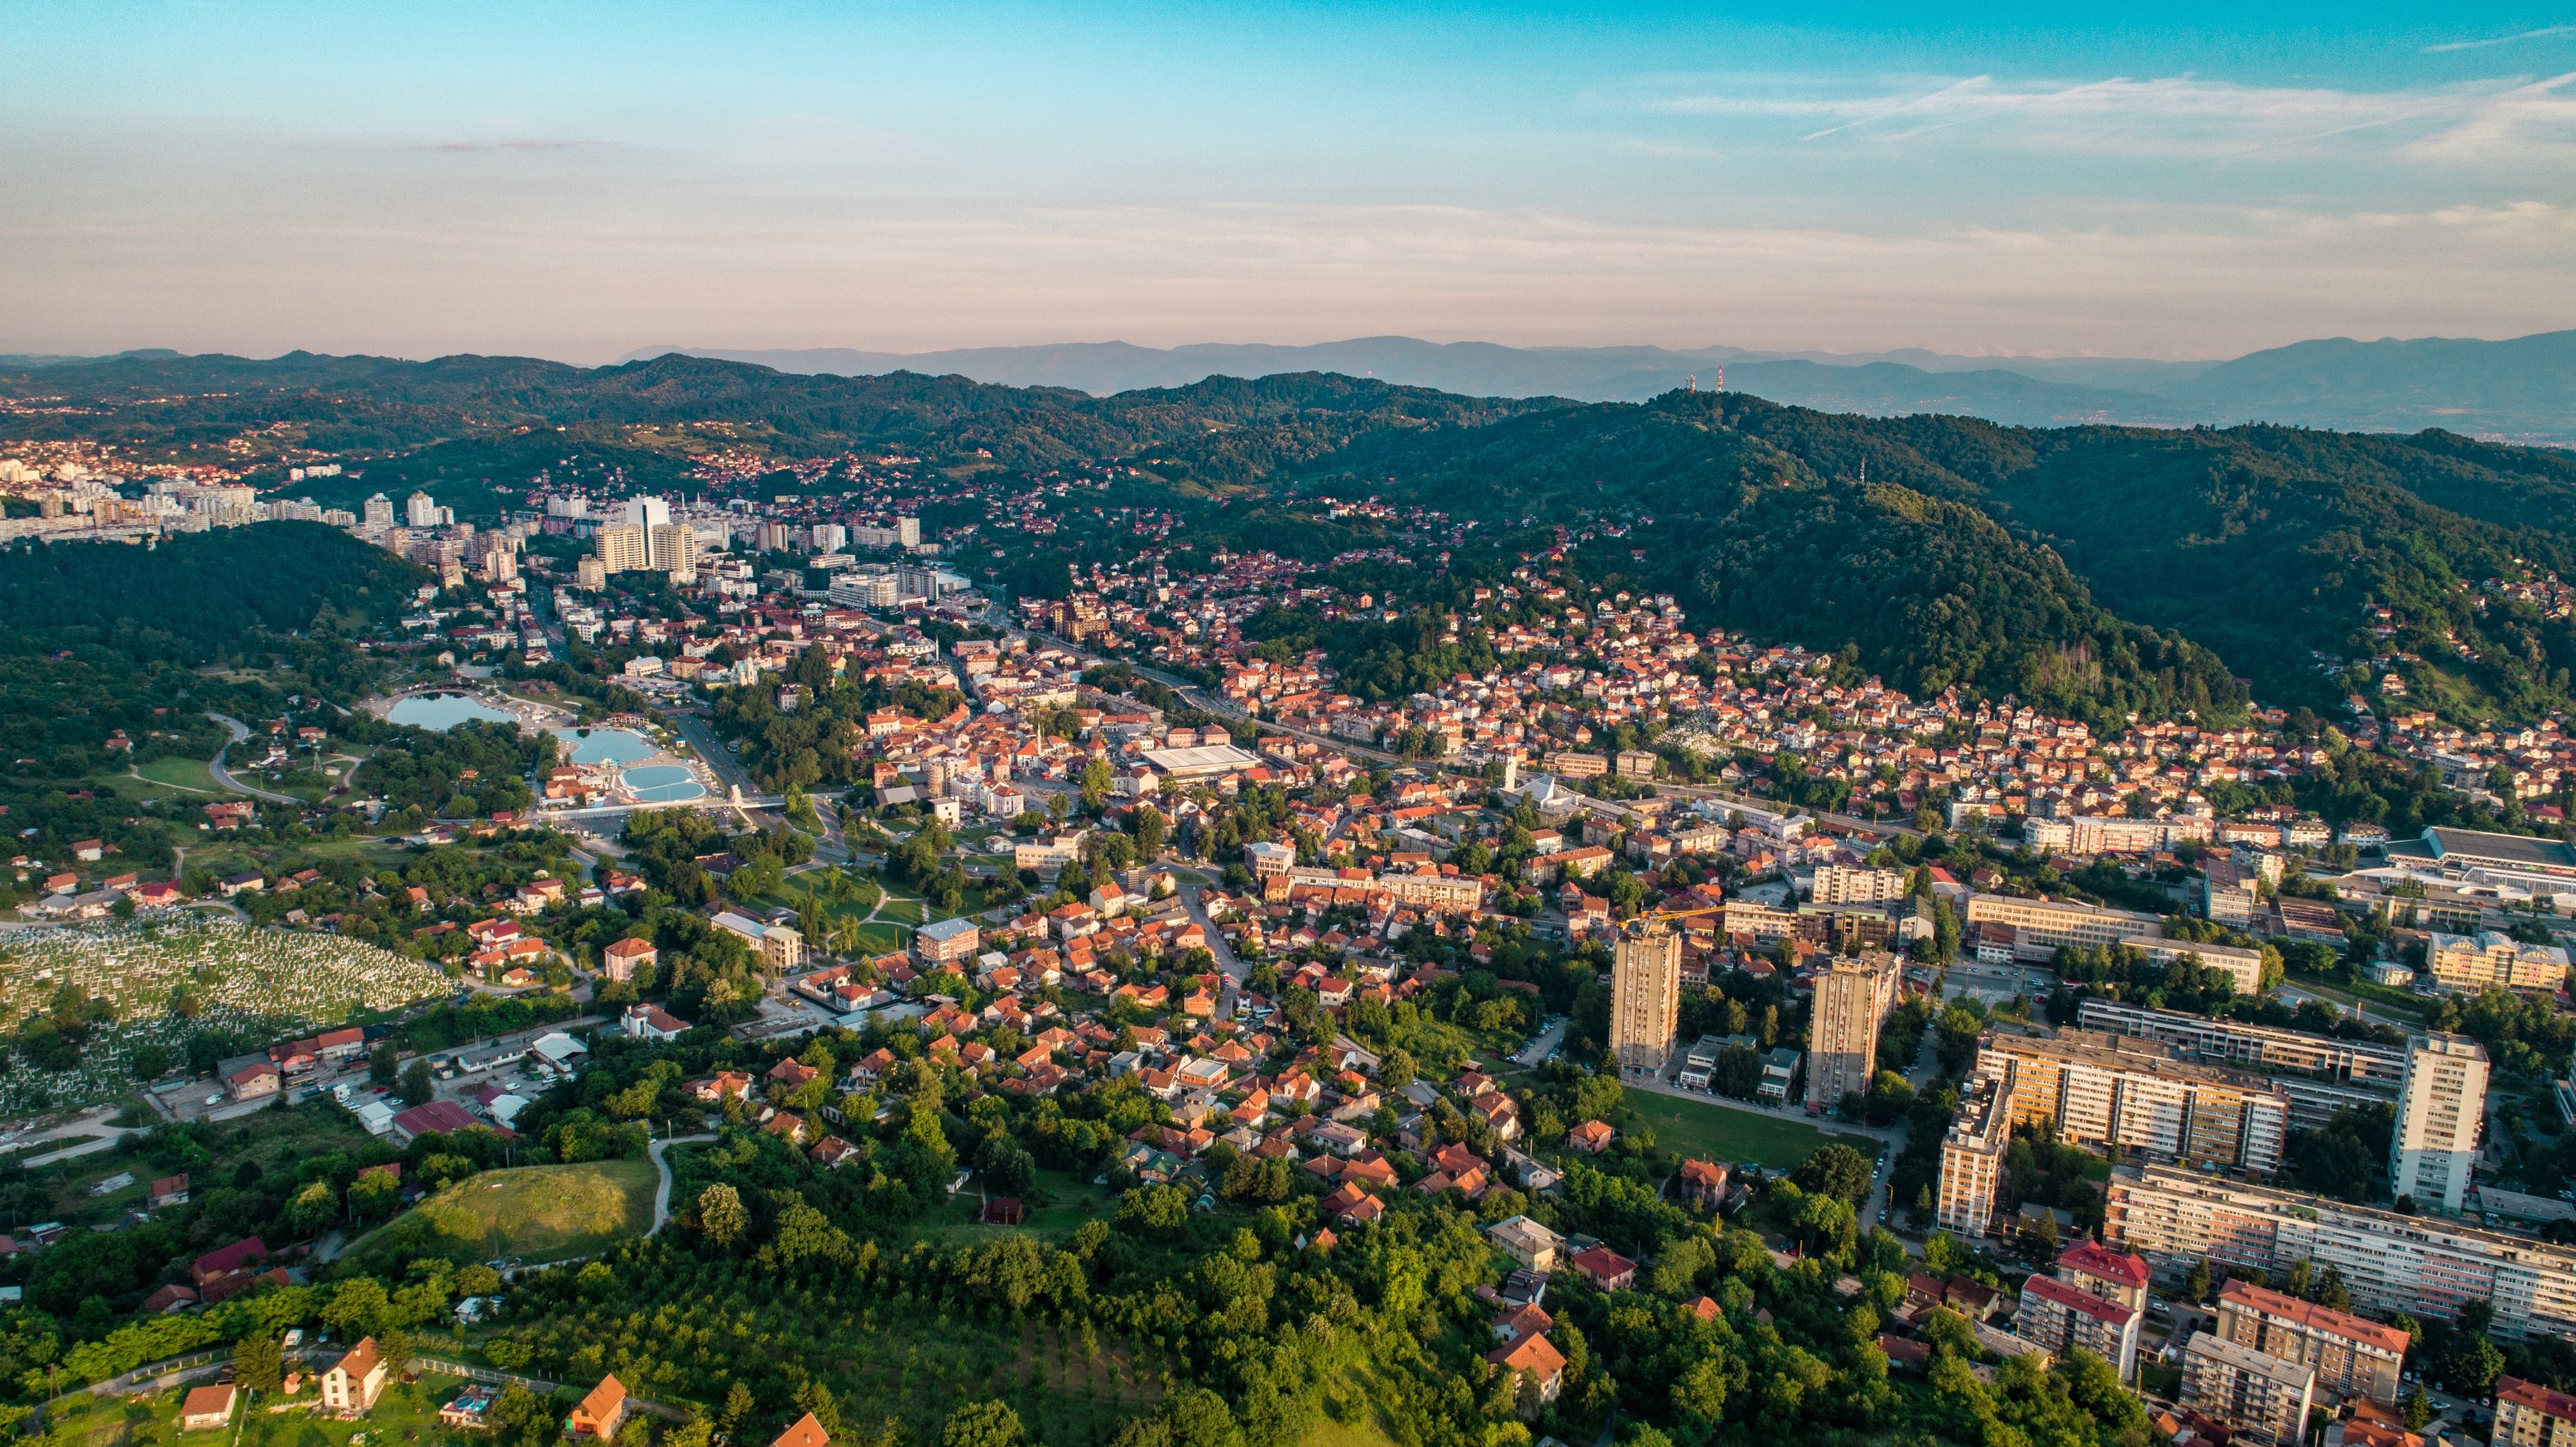 An aerial view of Tuzla city in Bosnia-Herzegovina. (Shutterstock Photo)